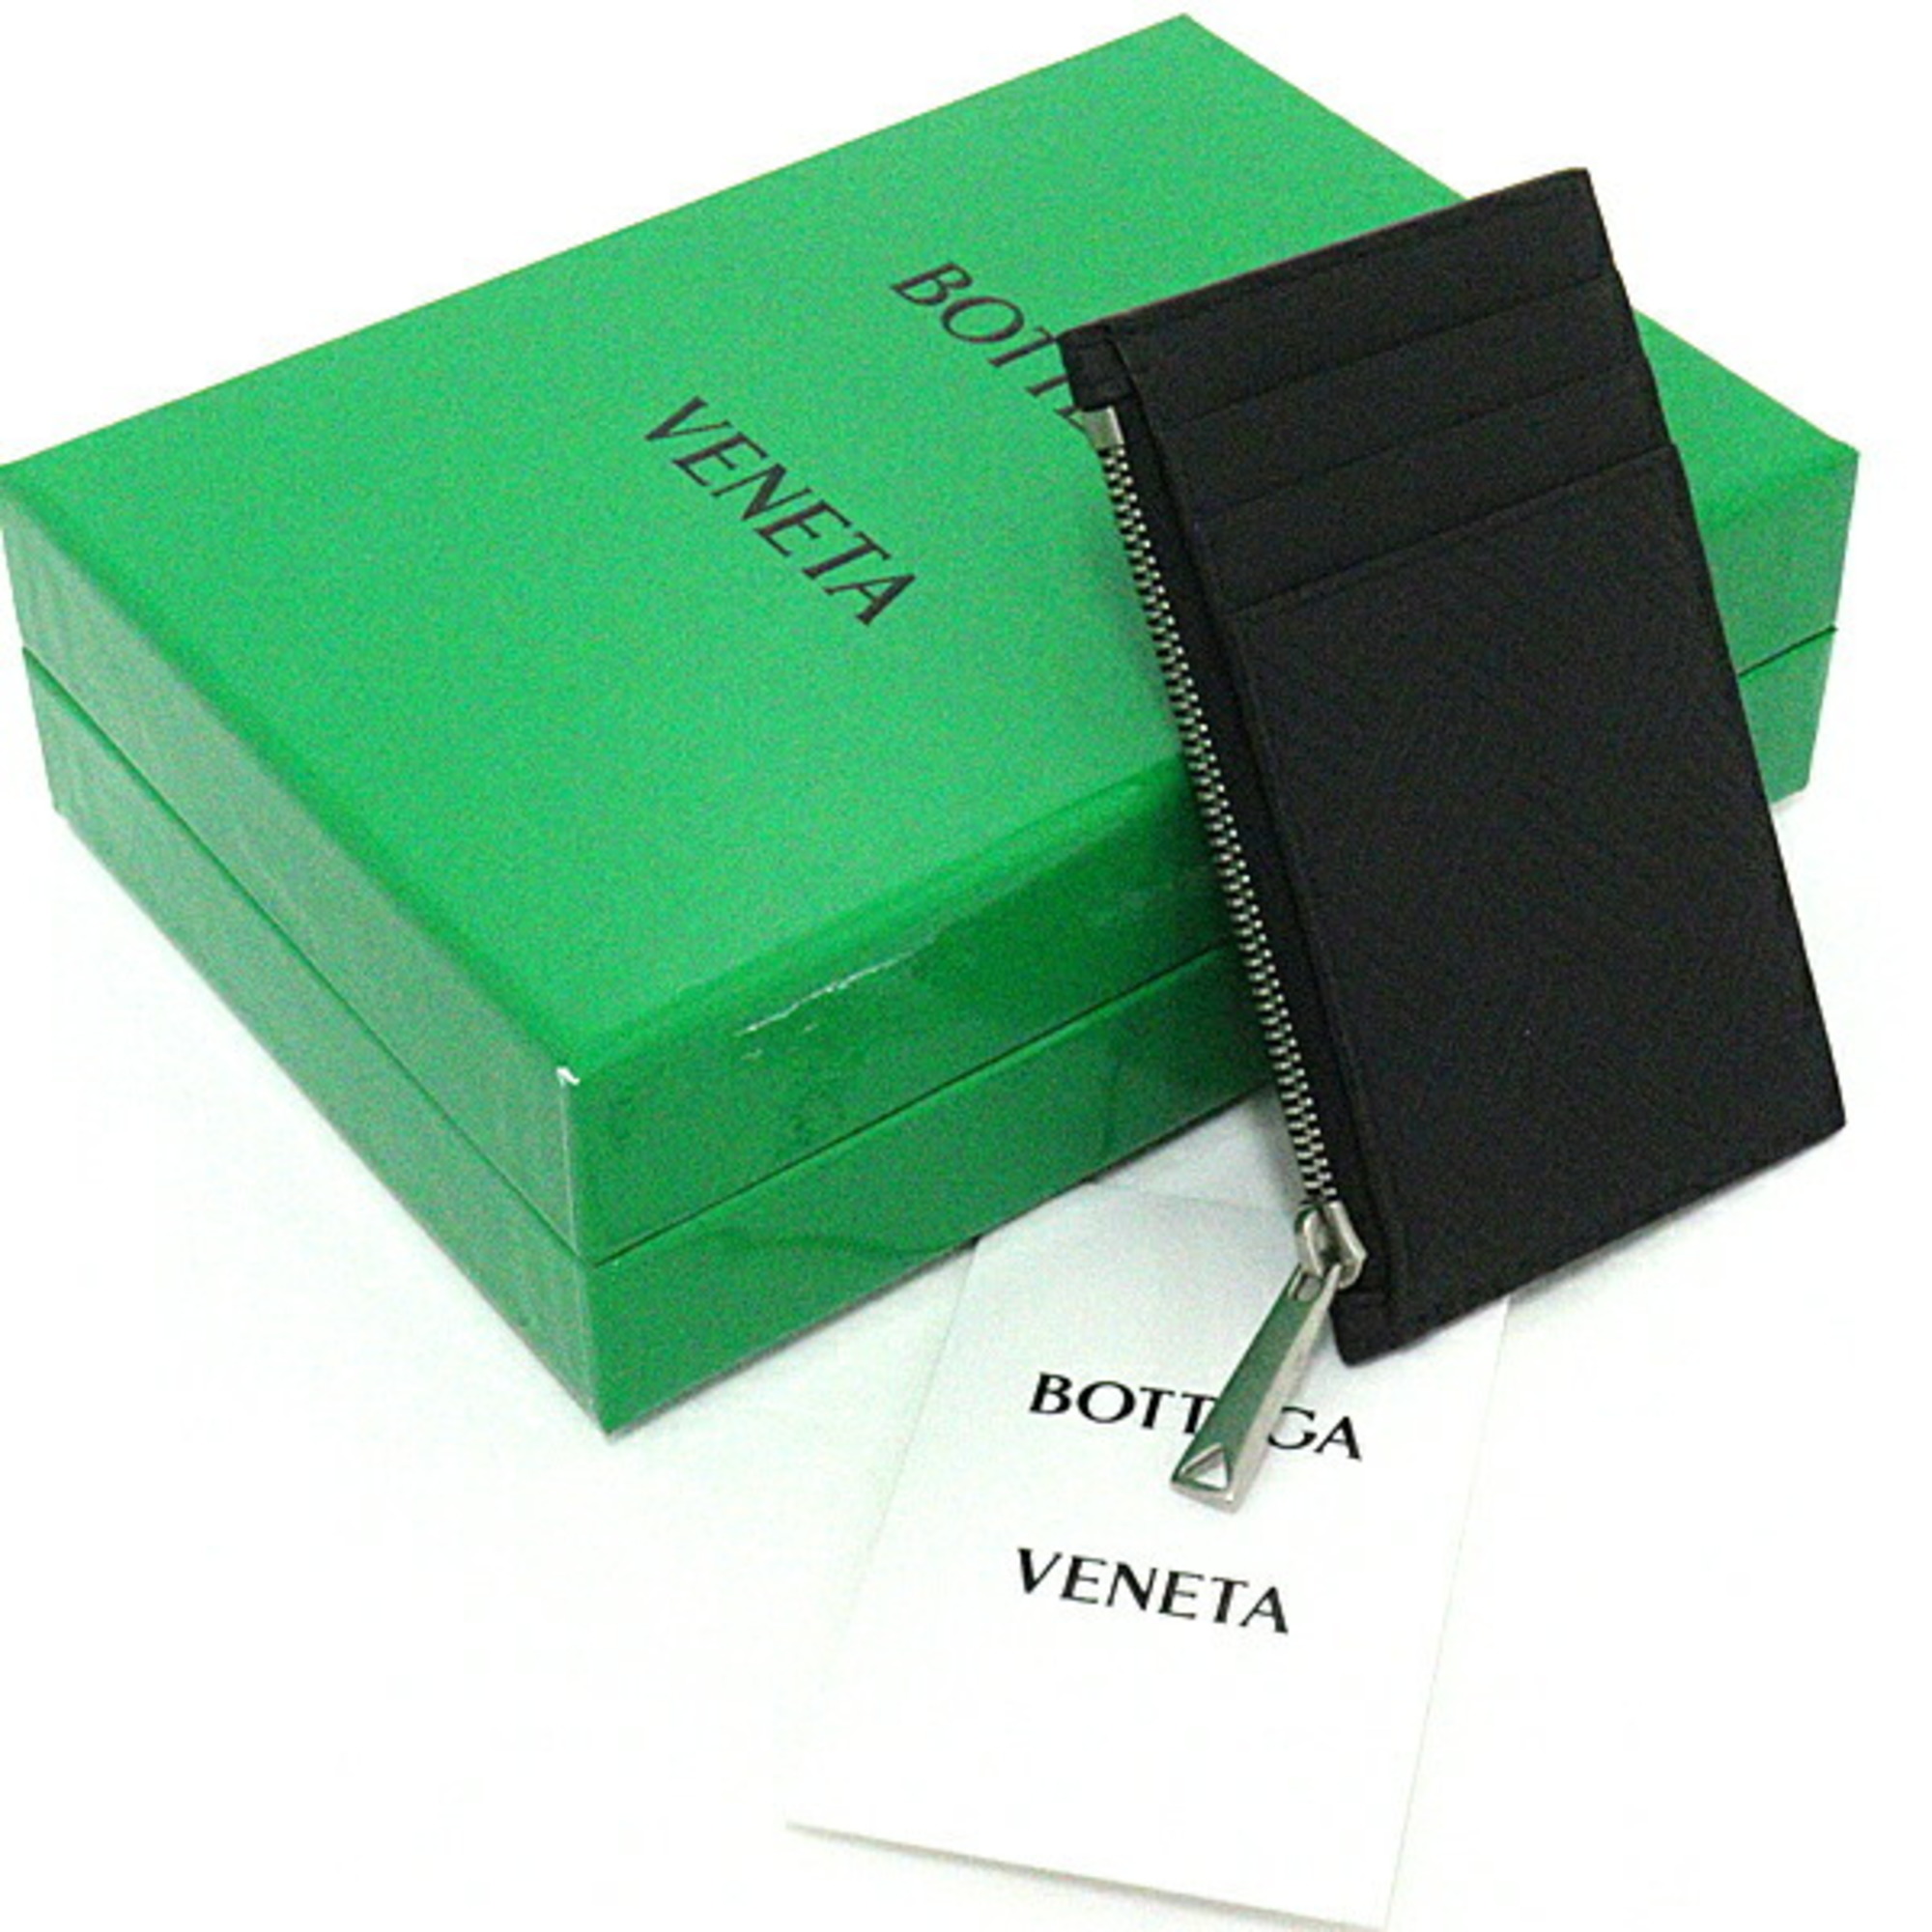 BOTTEGA VENETA Bottega Veneta card case coin pass black